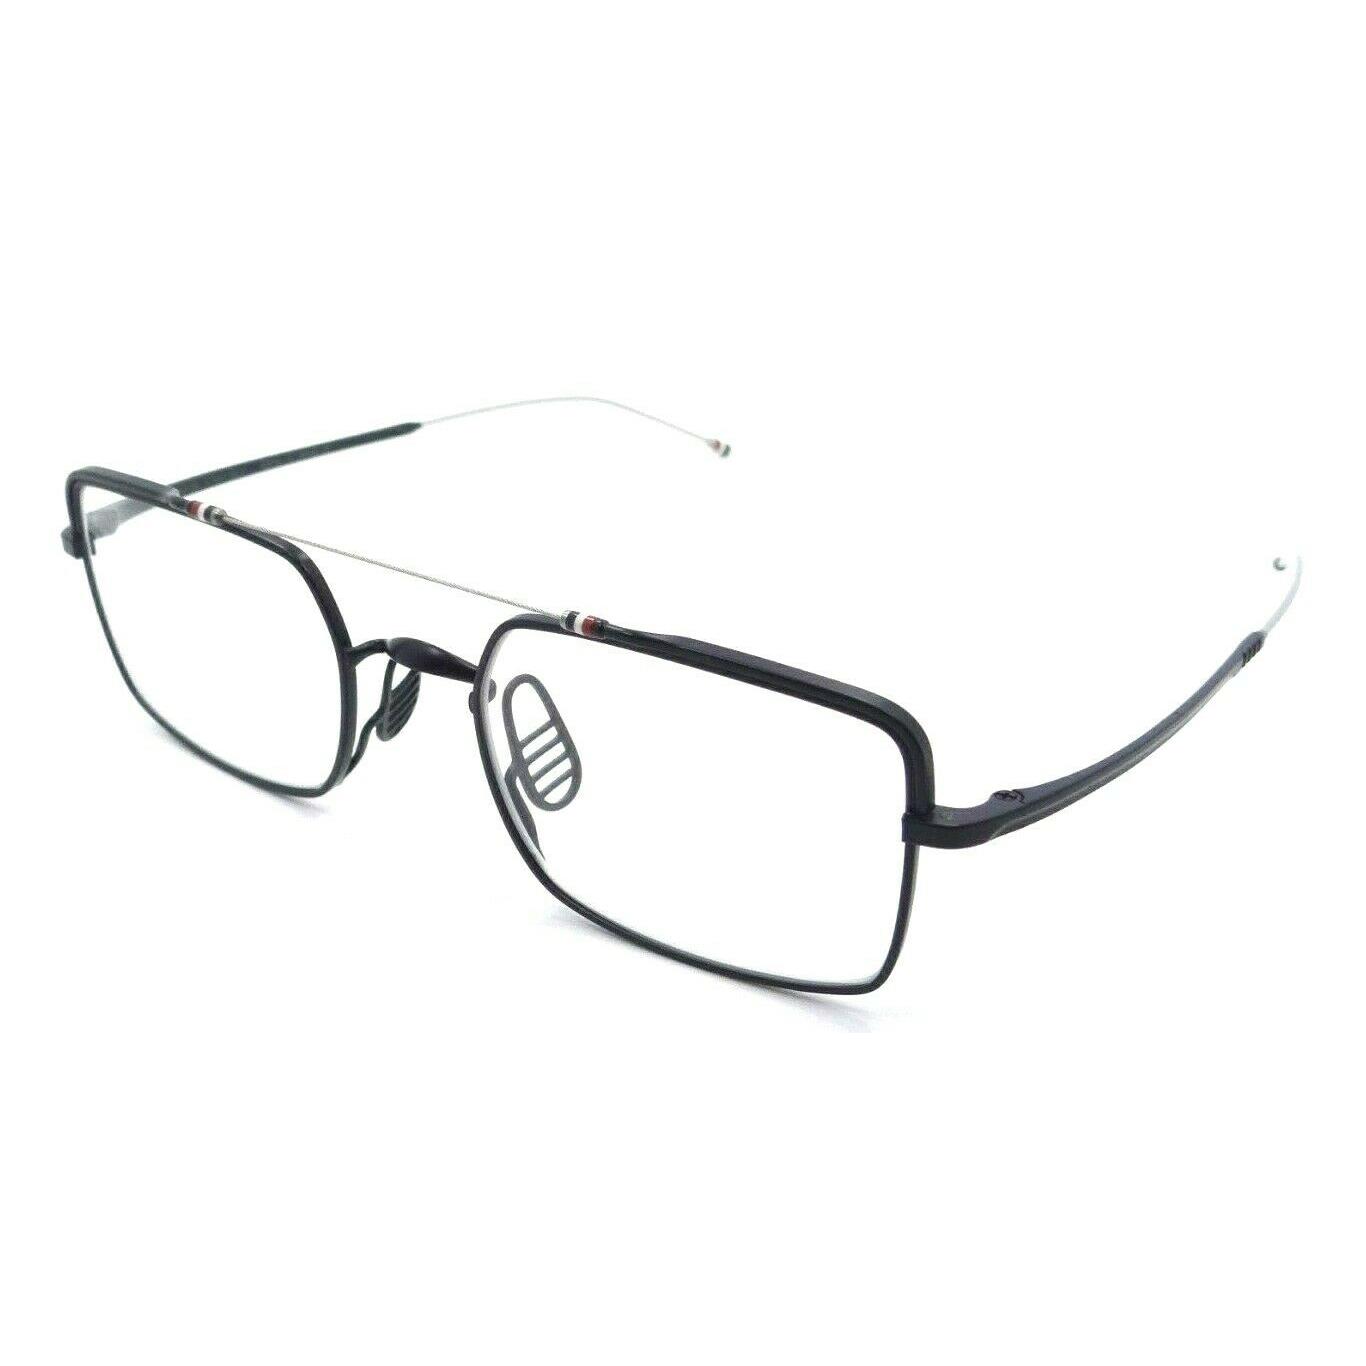 Thom Browne Eyeglasses Frames TBX909-49-03 49-20-140 Navy / Silver